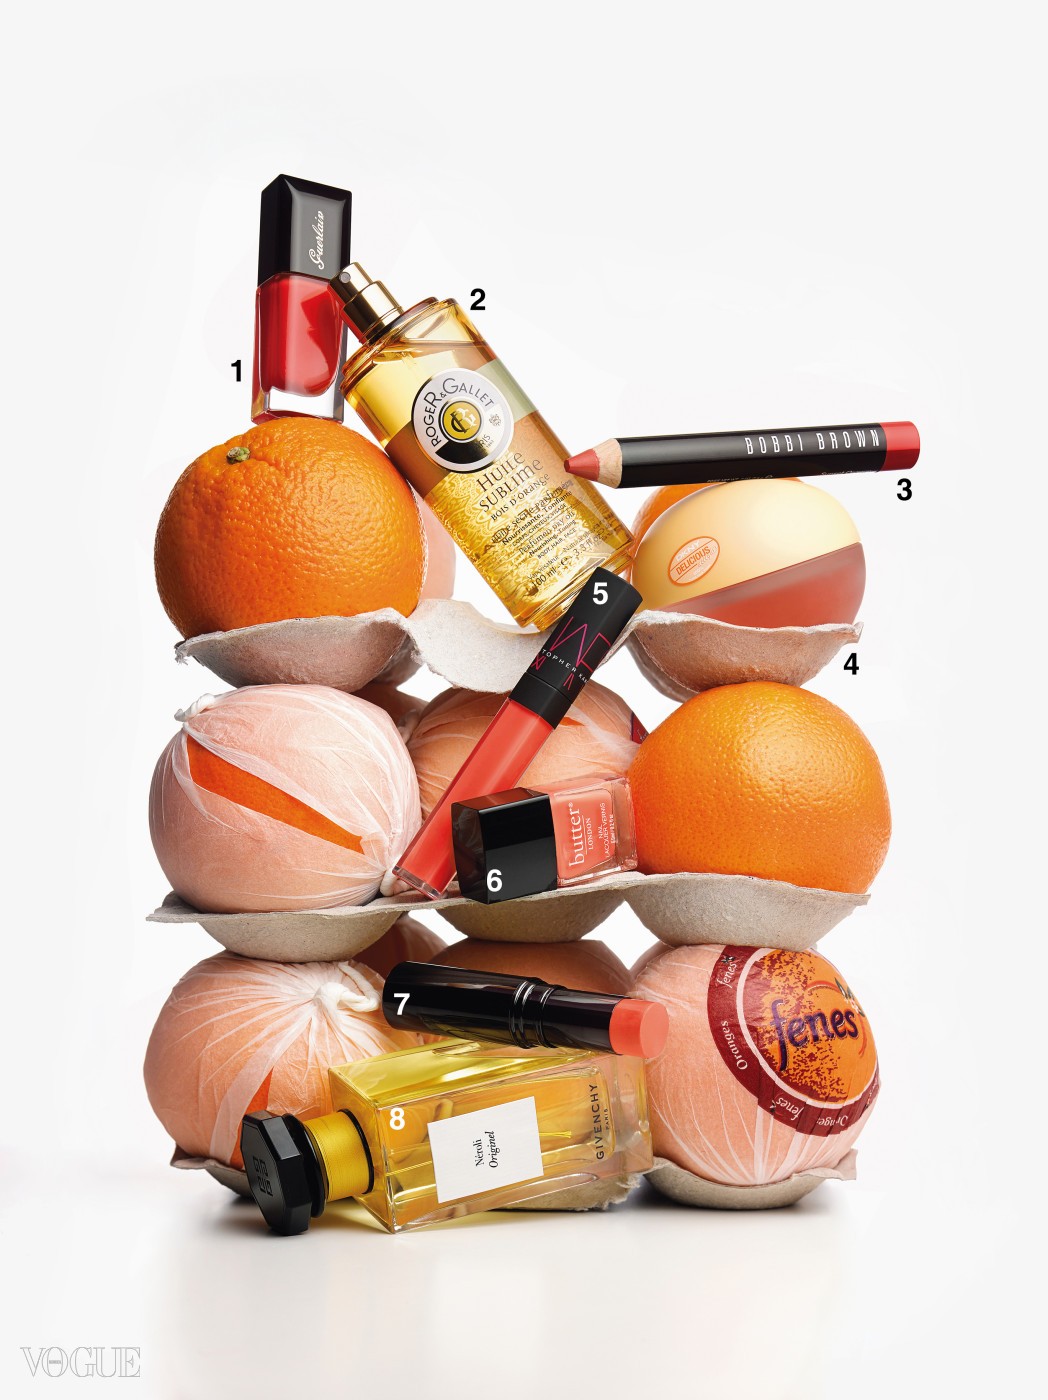 Beauty, citrus, orange, summer, studio shot, selection, fragrances, nail polish, lipstick